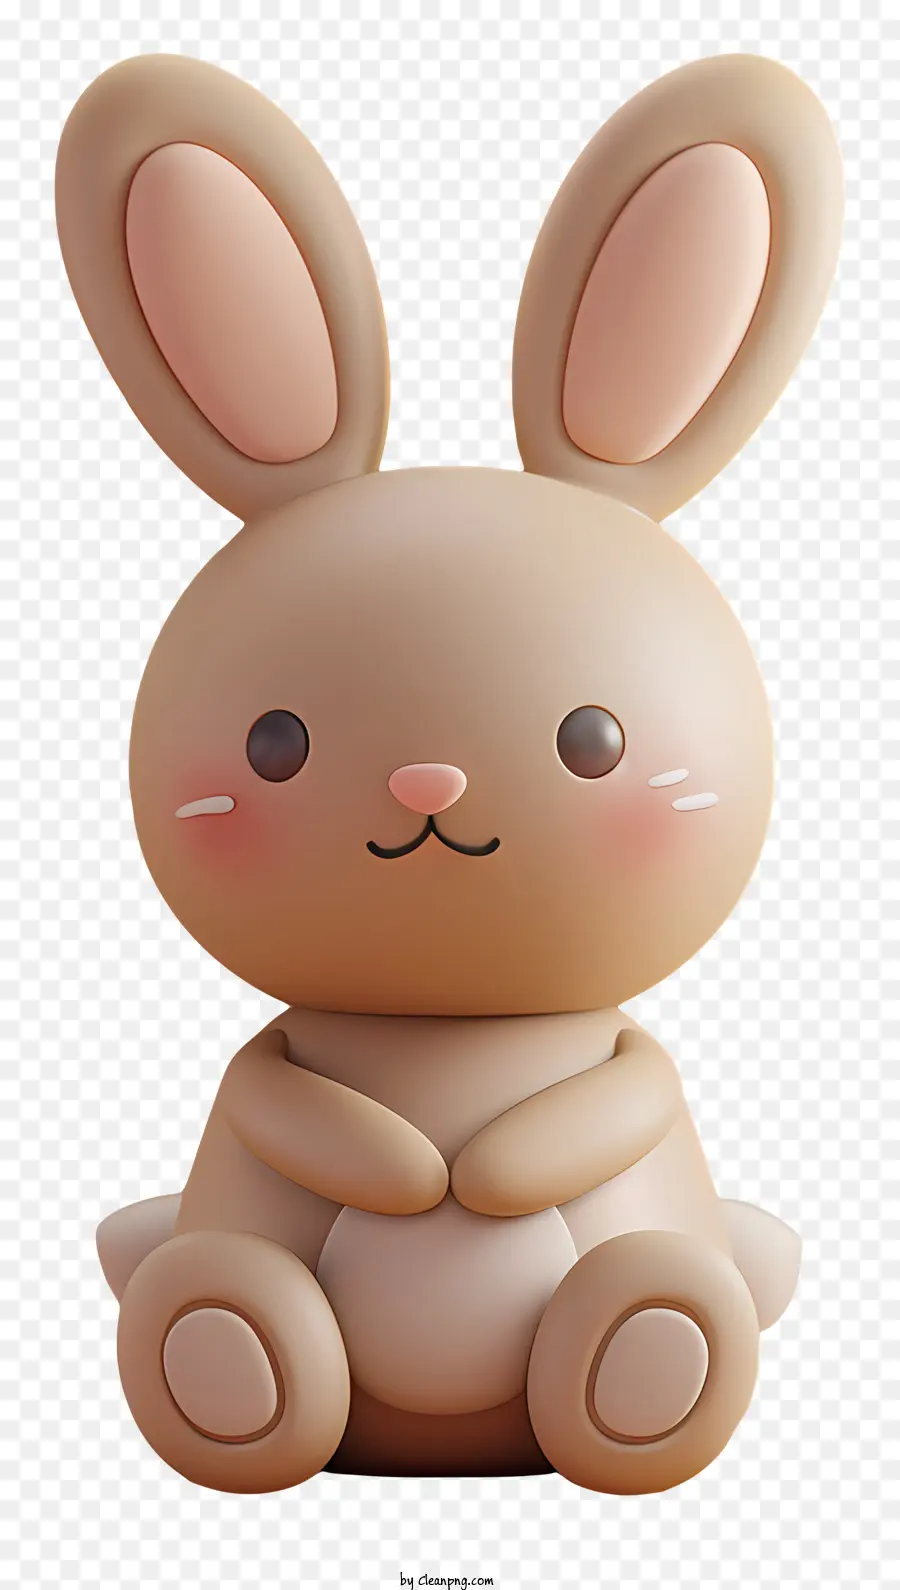 clay rabbit cute rabbit cartoon rabbit cuddly rabbit rabbit with big eyes